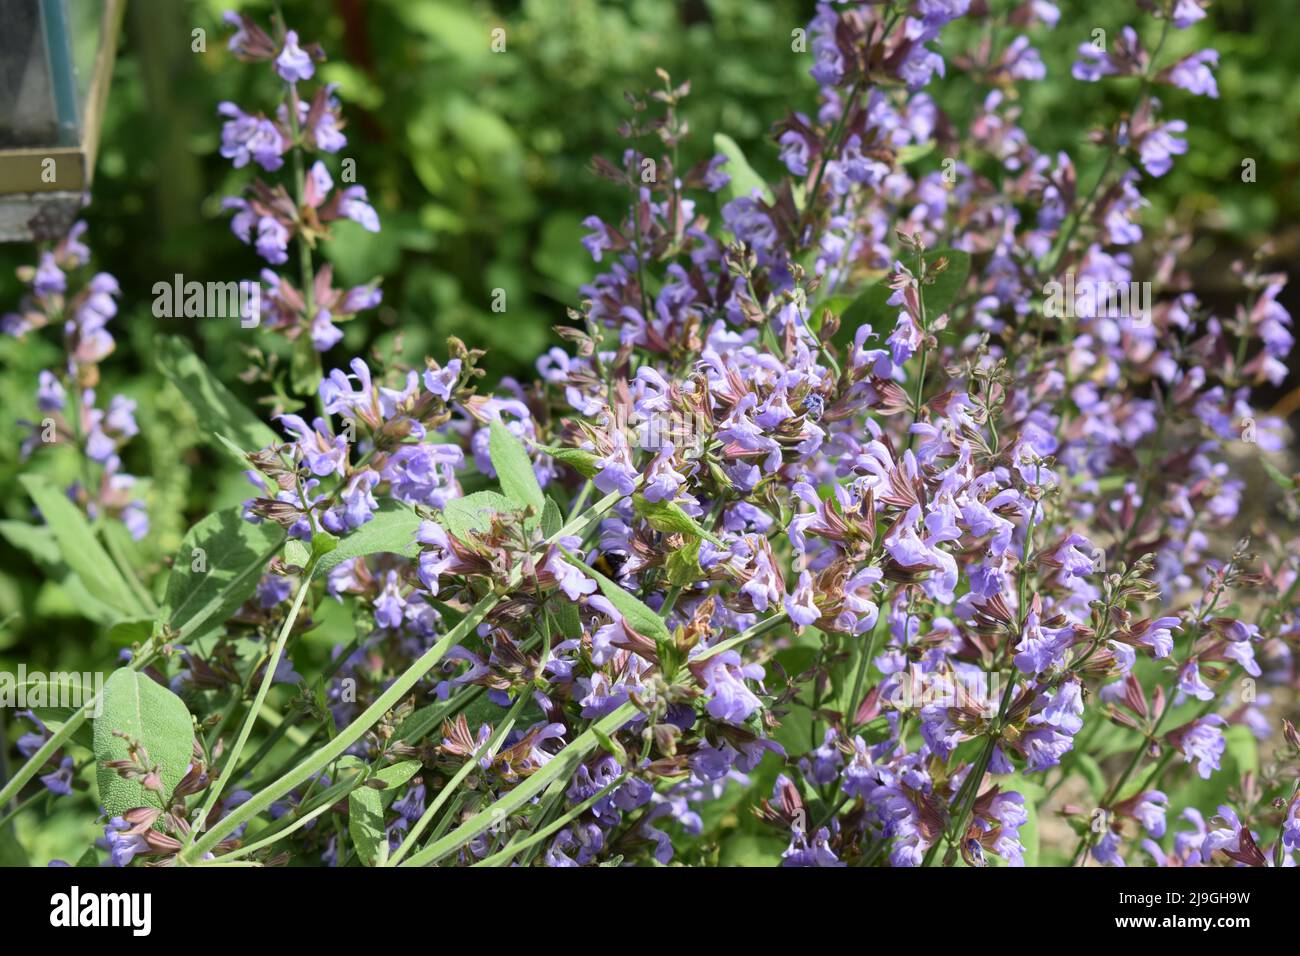 bumblebee on purple blooming sage flowers Stock Photo